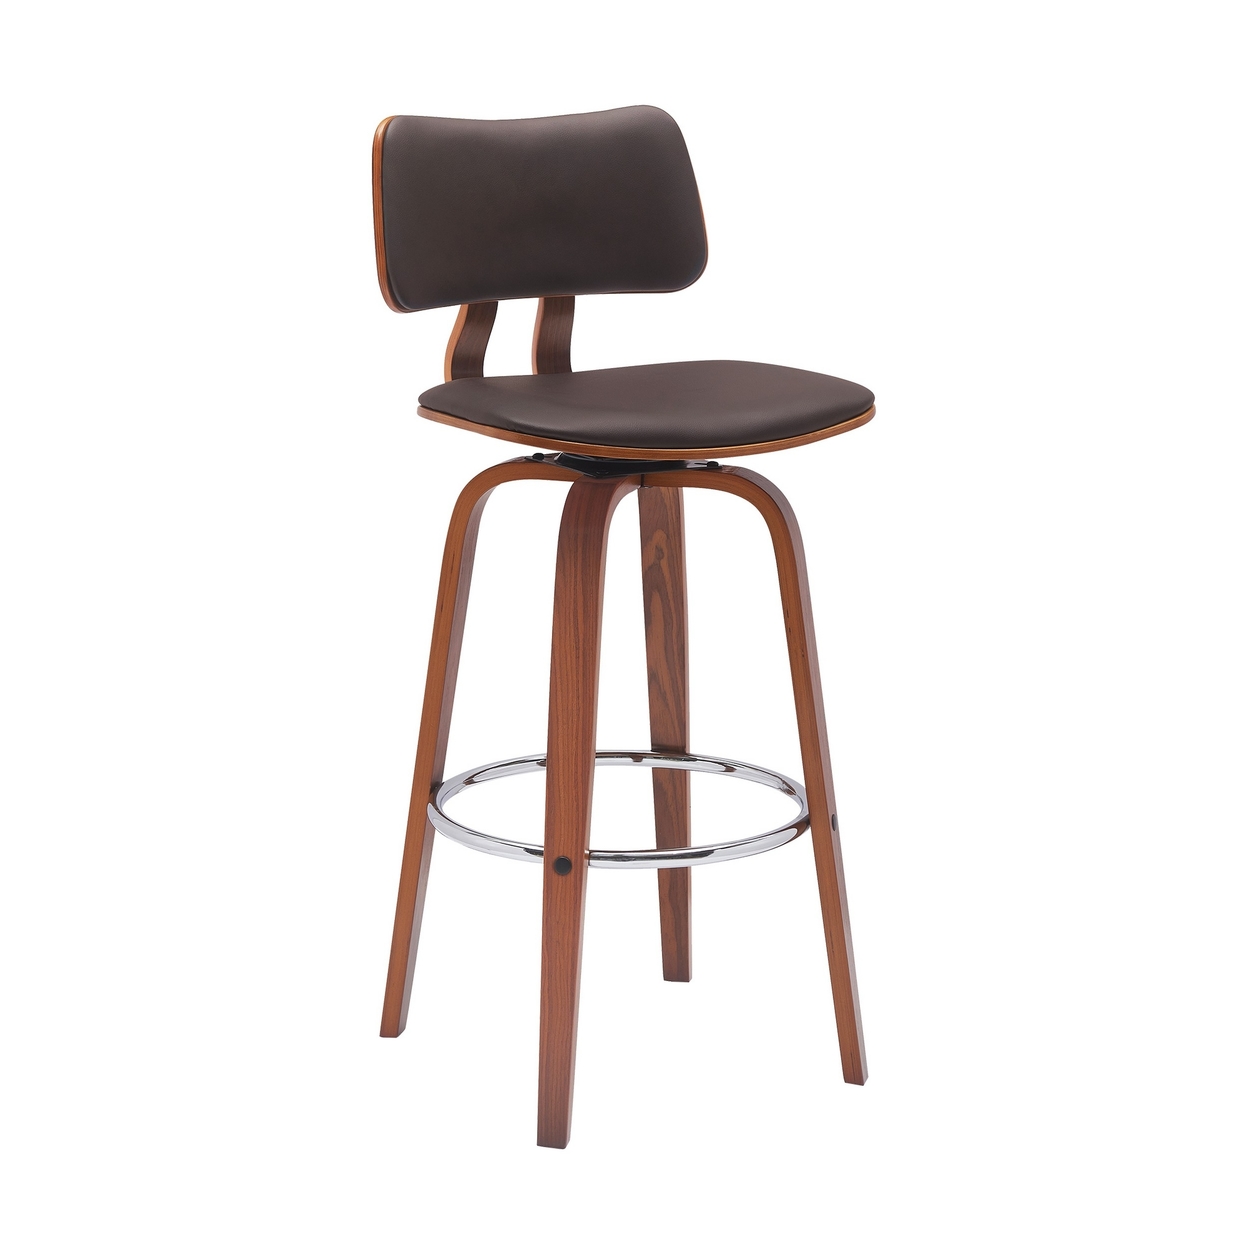 Pino 30 Inch Swivel Barstool Chair, Brown Faux Leather Walnut Brown Wood - Saltoro Sherpi